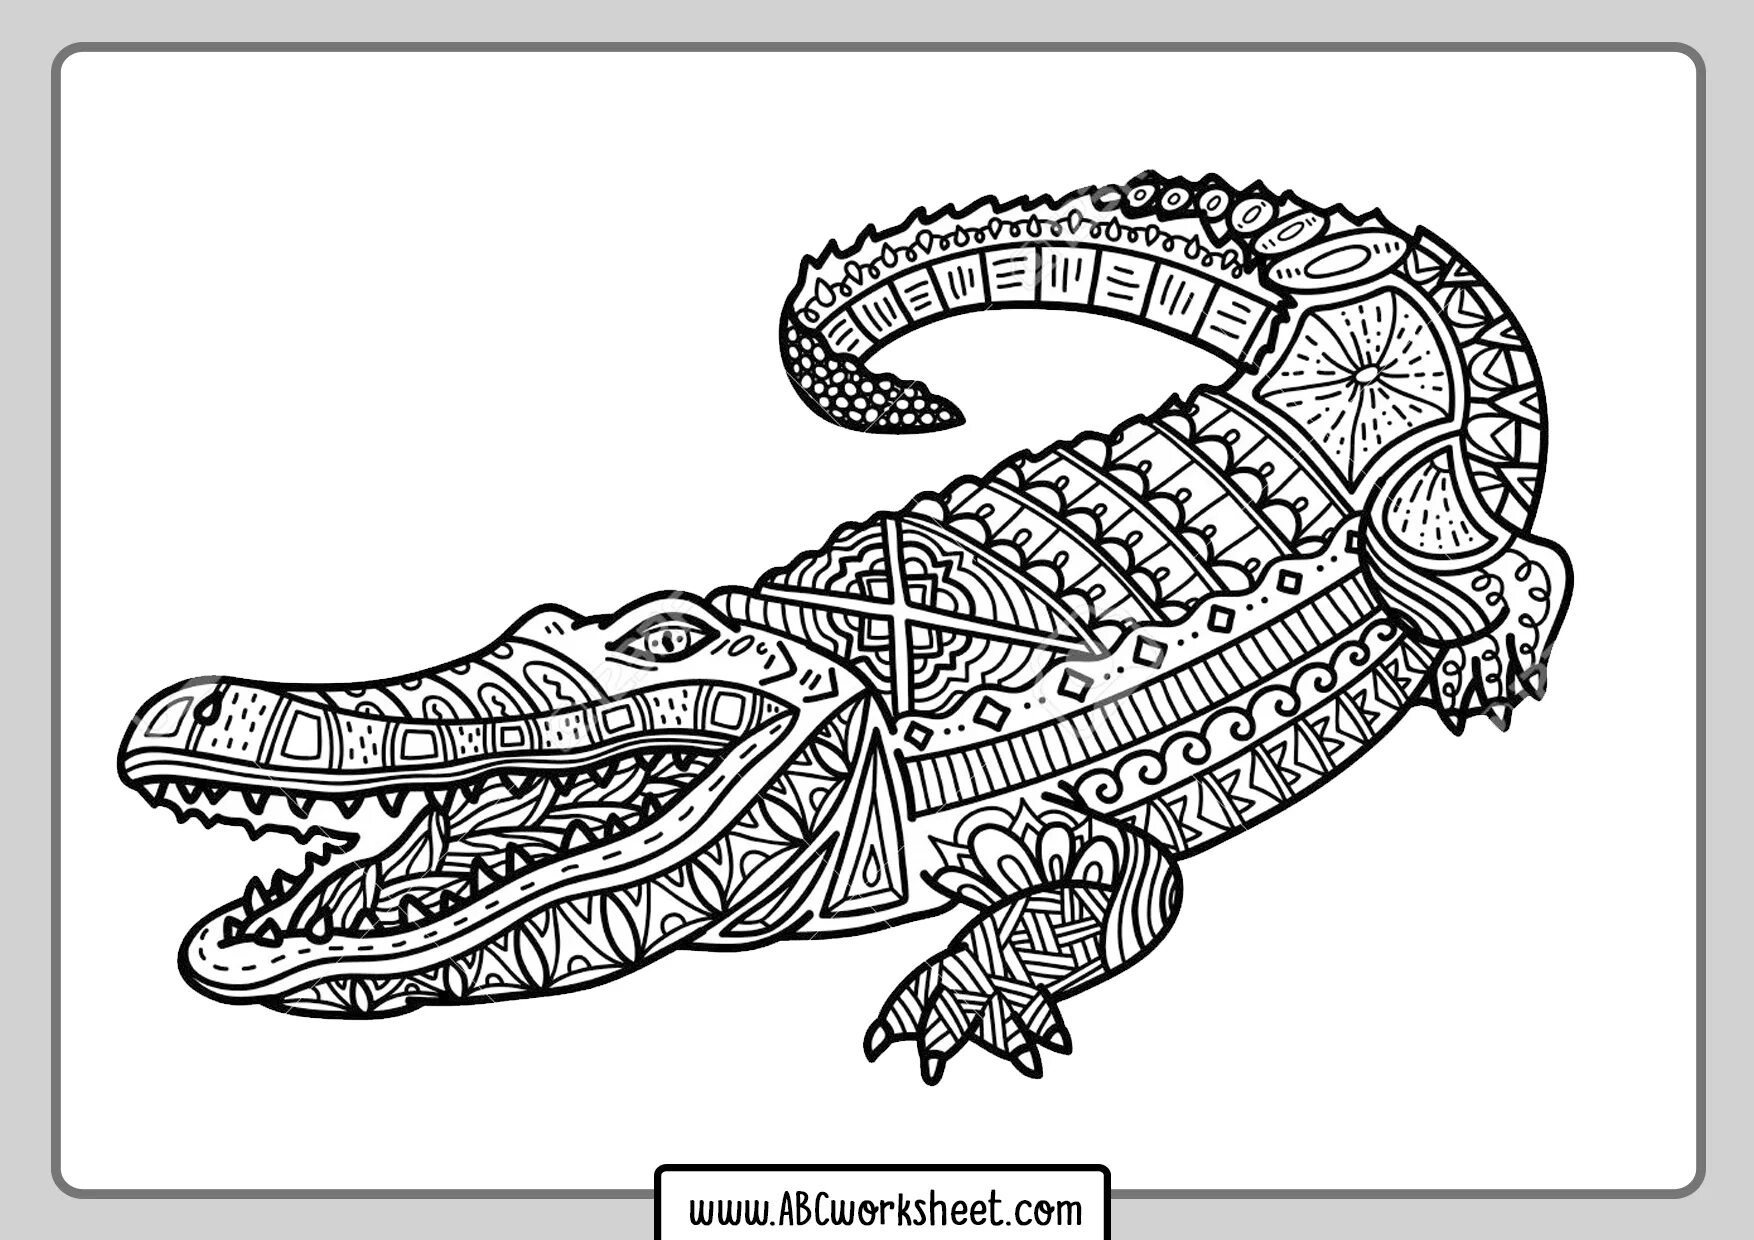 Comforting crocodile coloring antistress